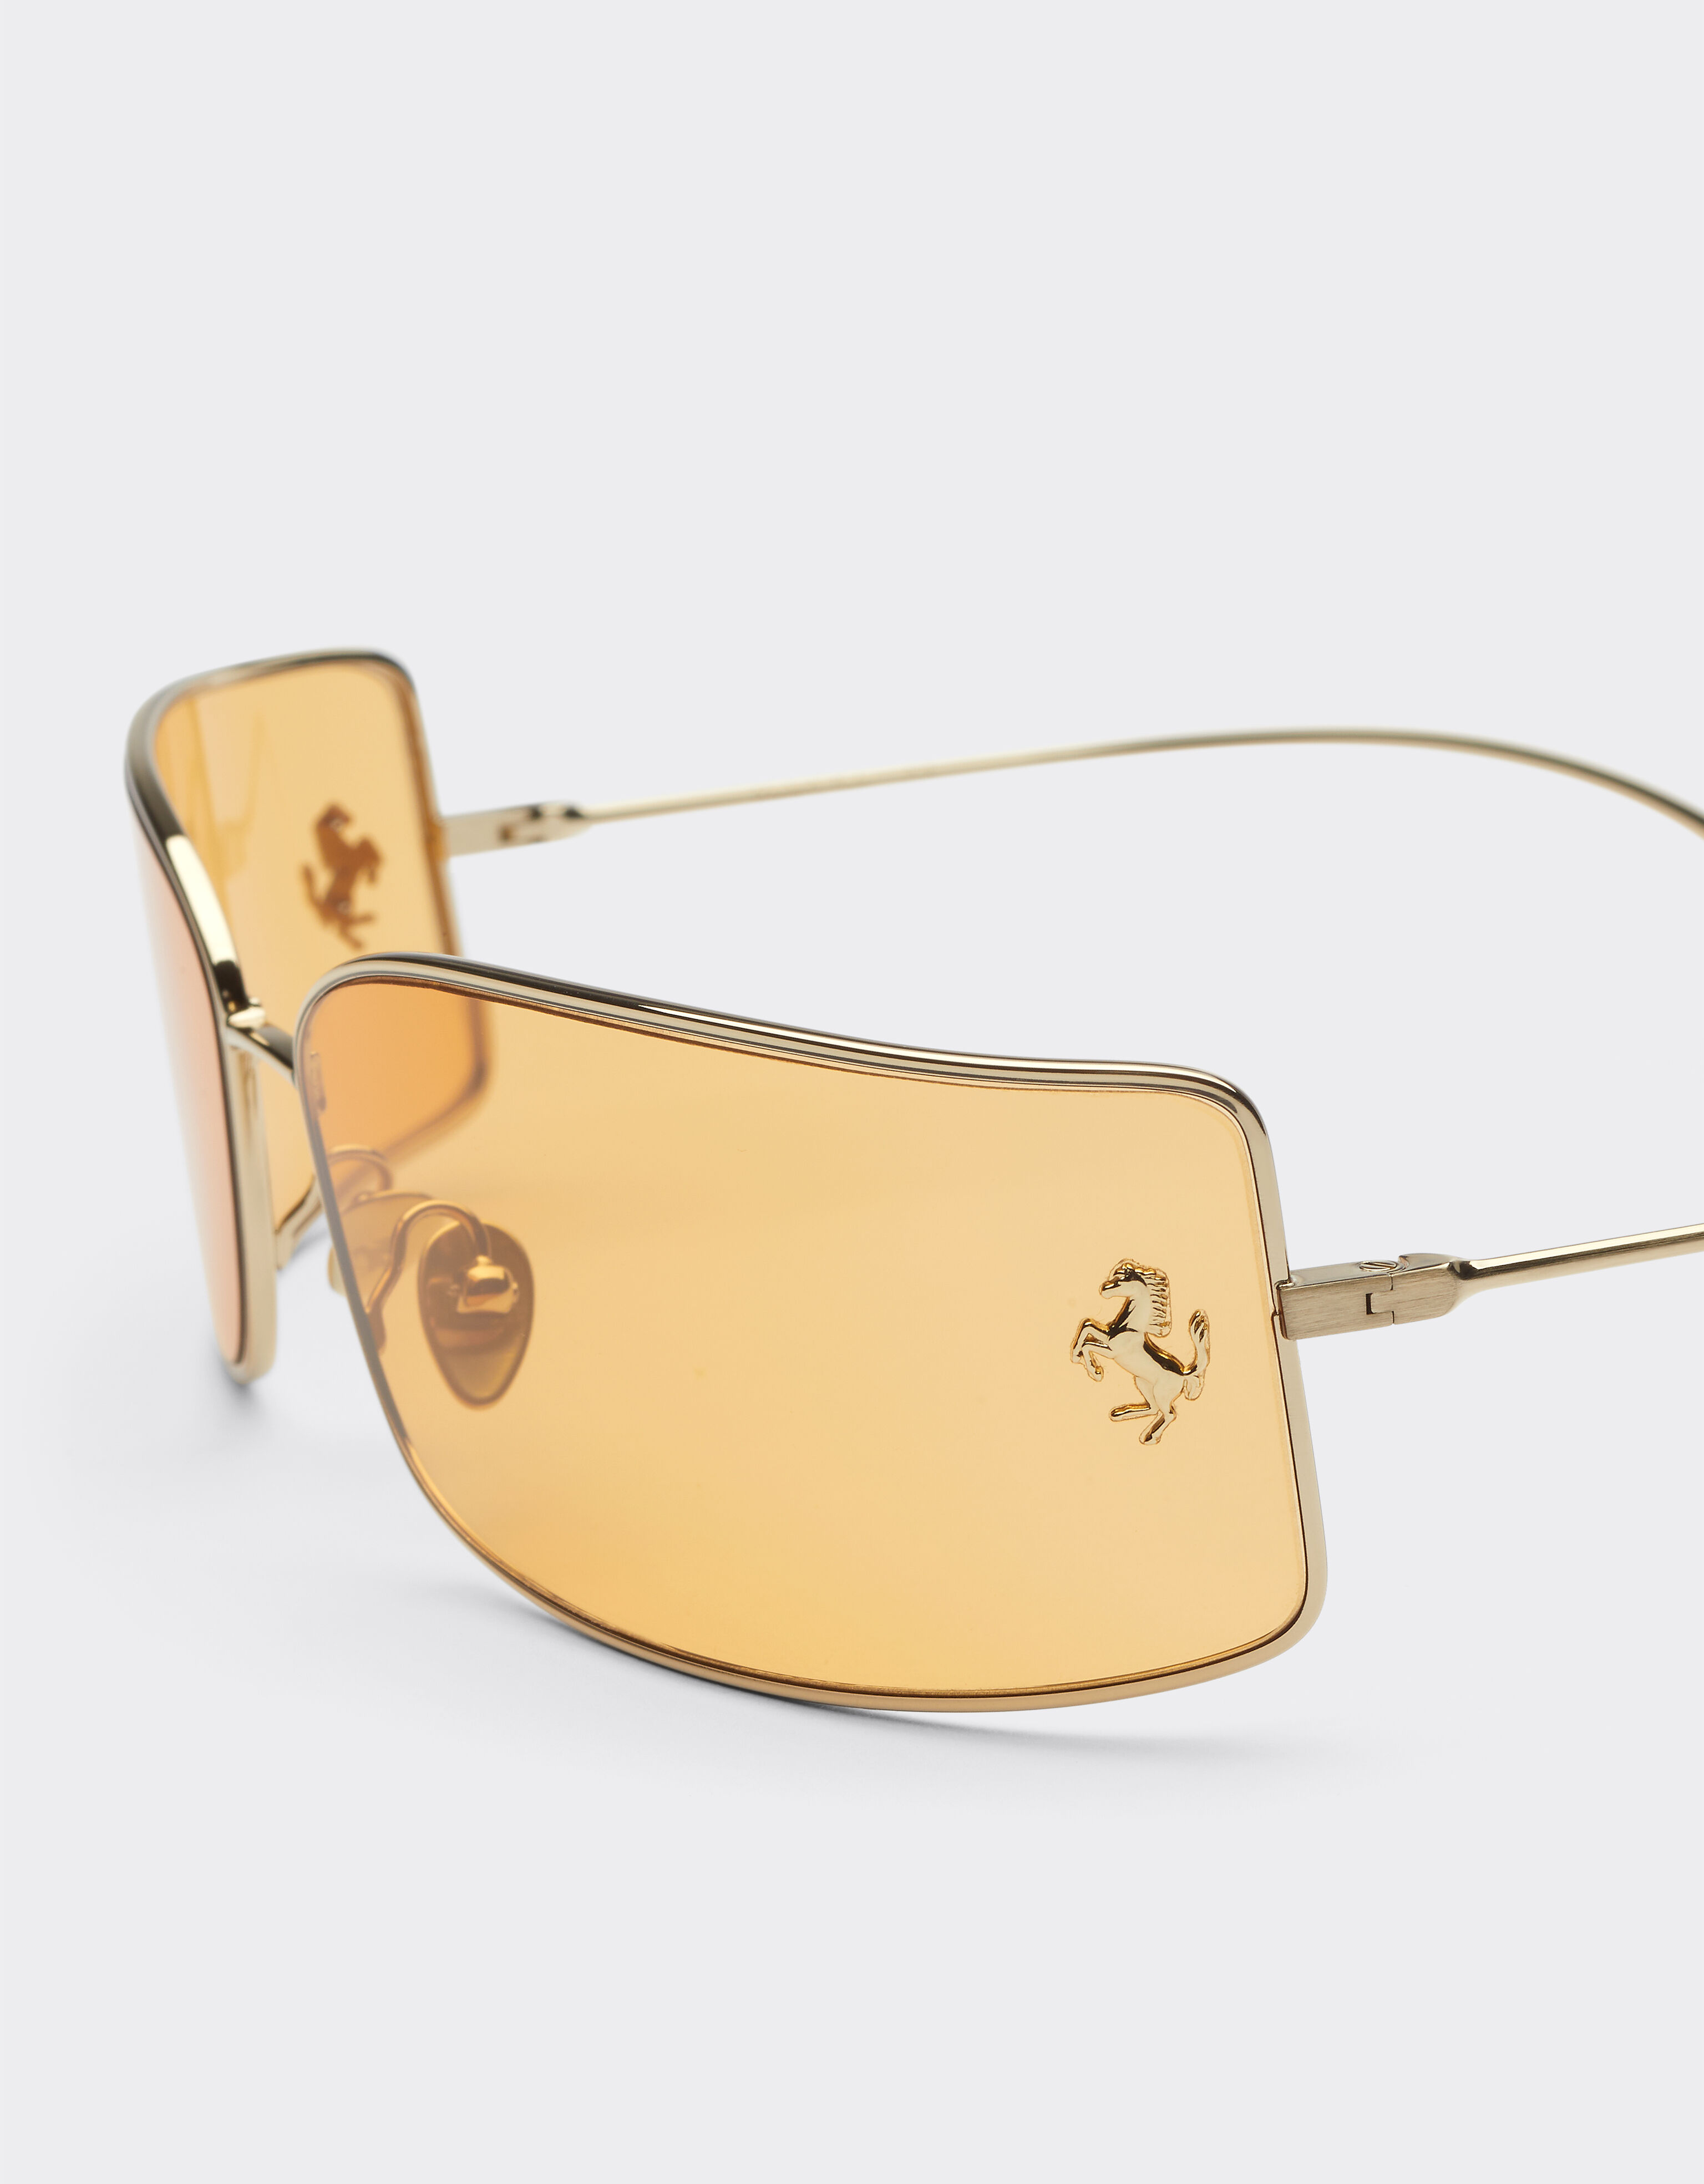 Ferrari Ferrari shield sunglasses with gold lenses 金色 F0643f